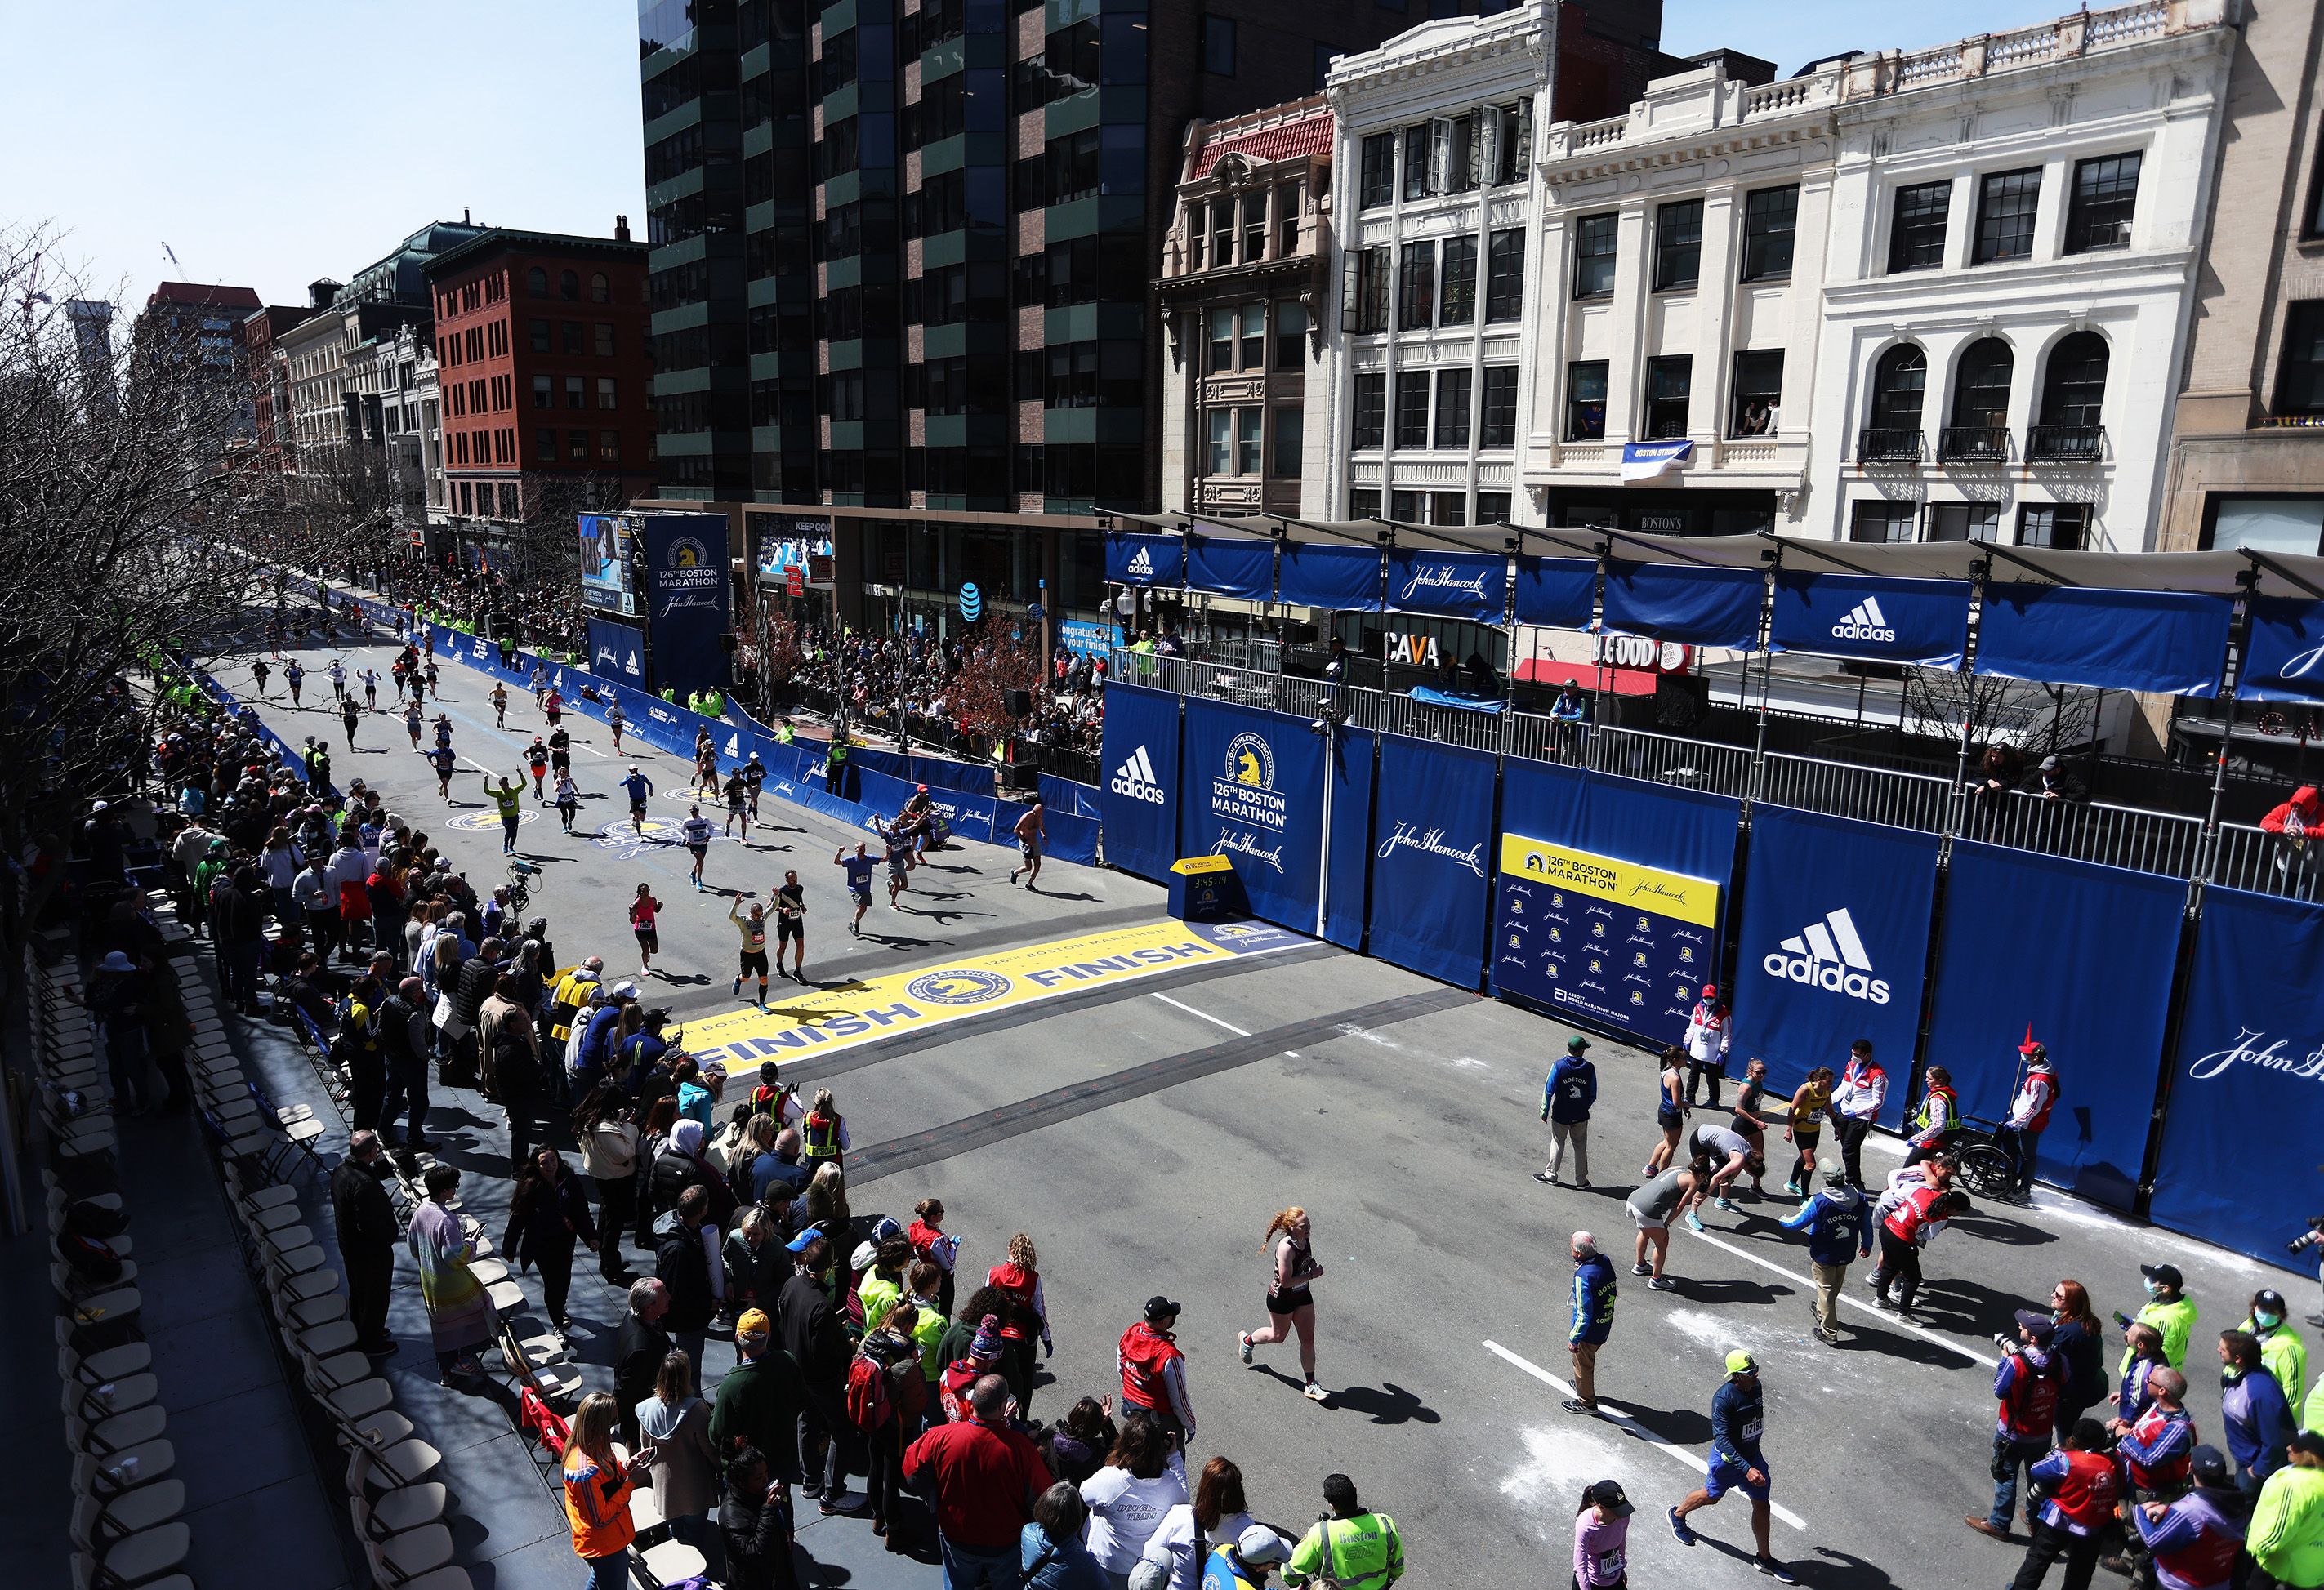 Boston Marathon change pregnancy deferral policy, following mounting pressure